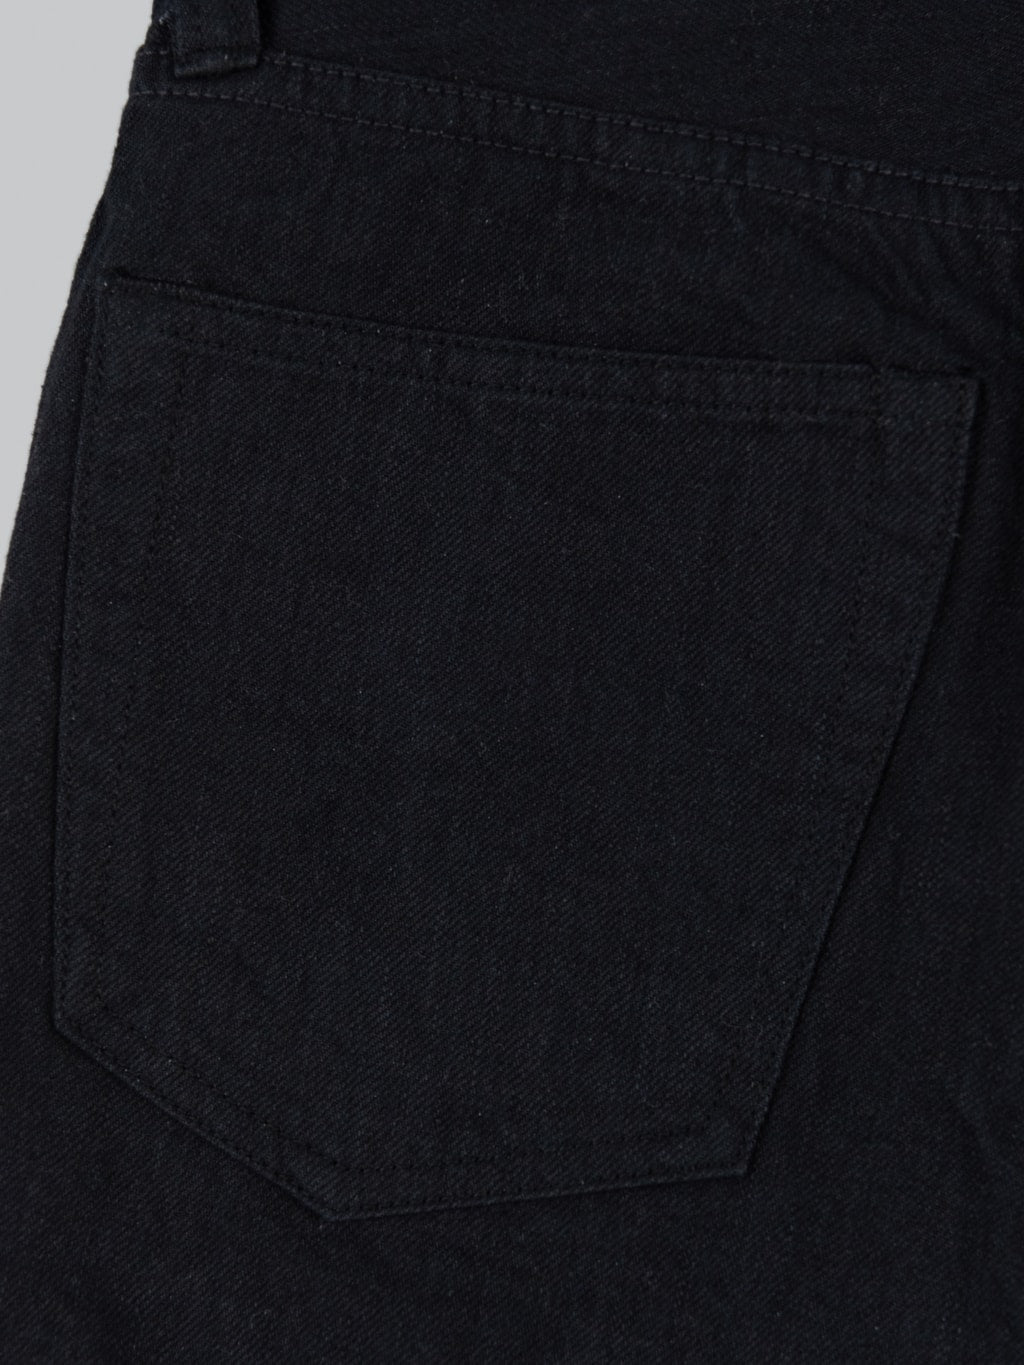 Sugar Cane Type III 13oz Black Denim Slim Jeans fabric closeup